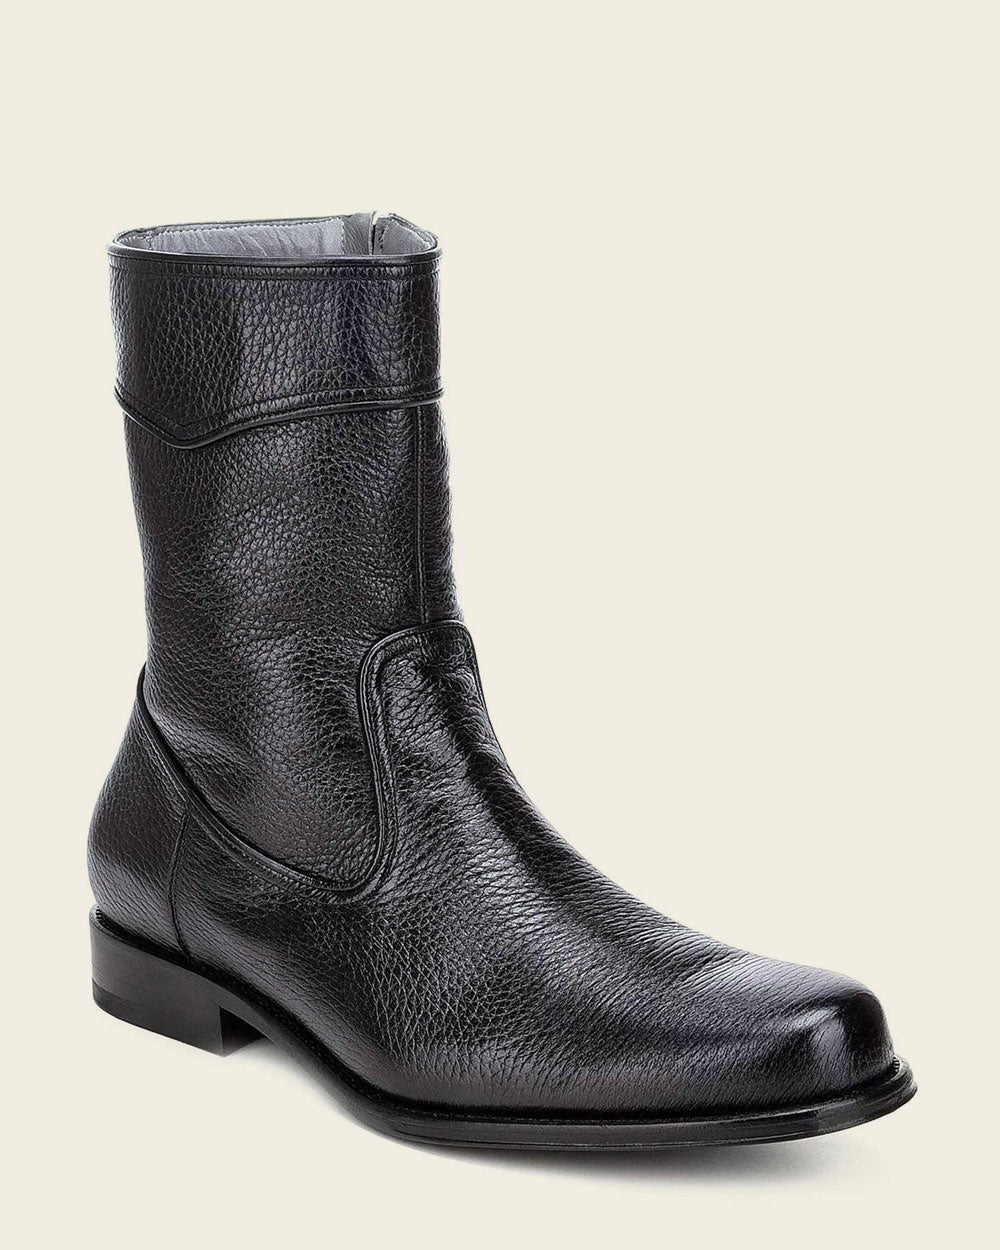 Black Deer Leather Boots by Cuadra: Elegance & comfort in hand-painted luxury.